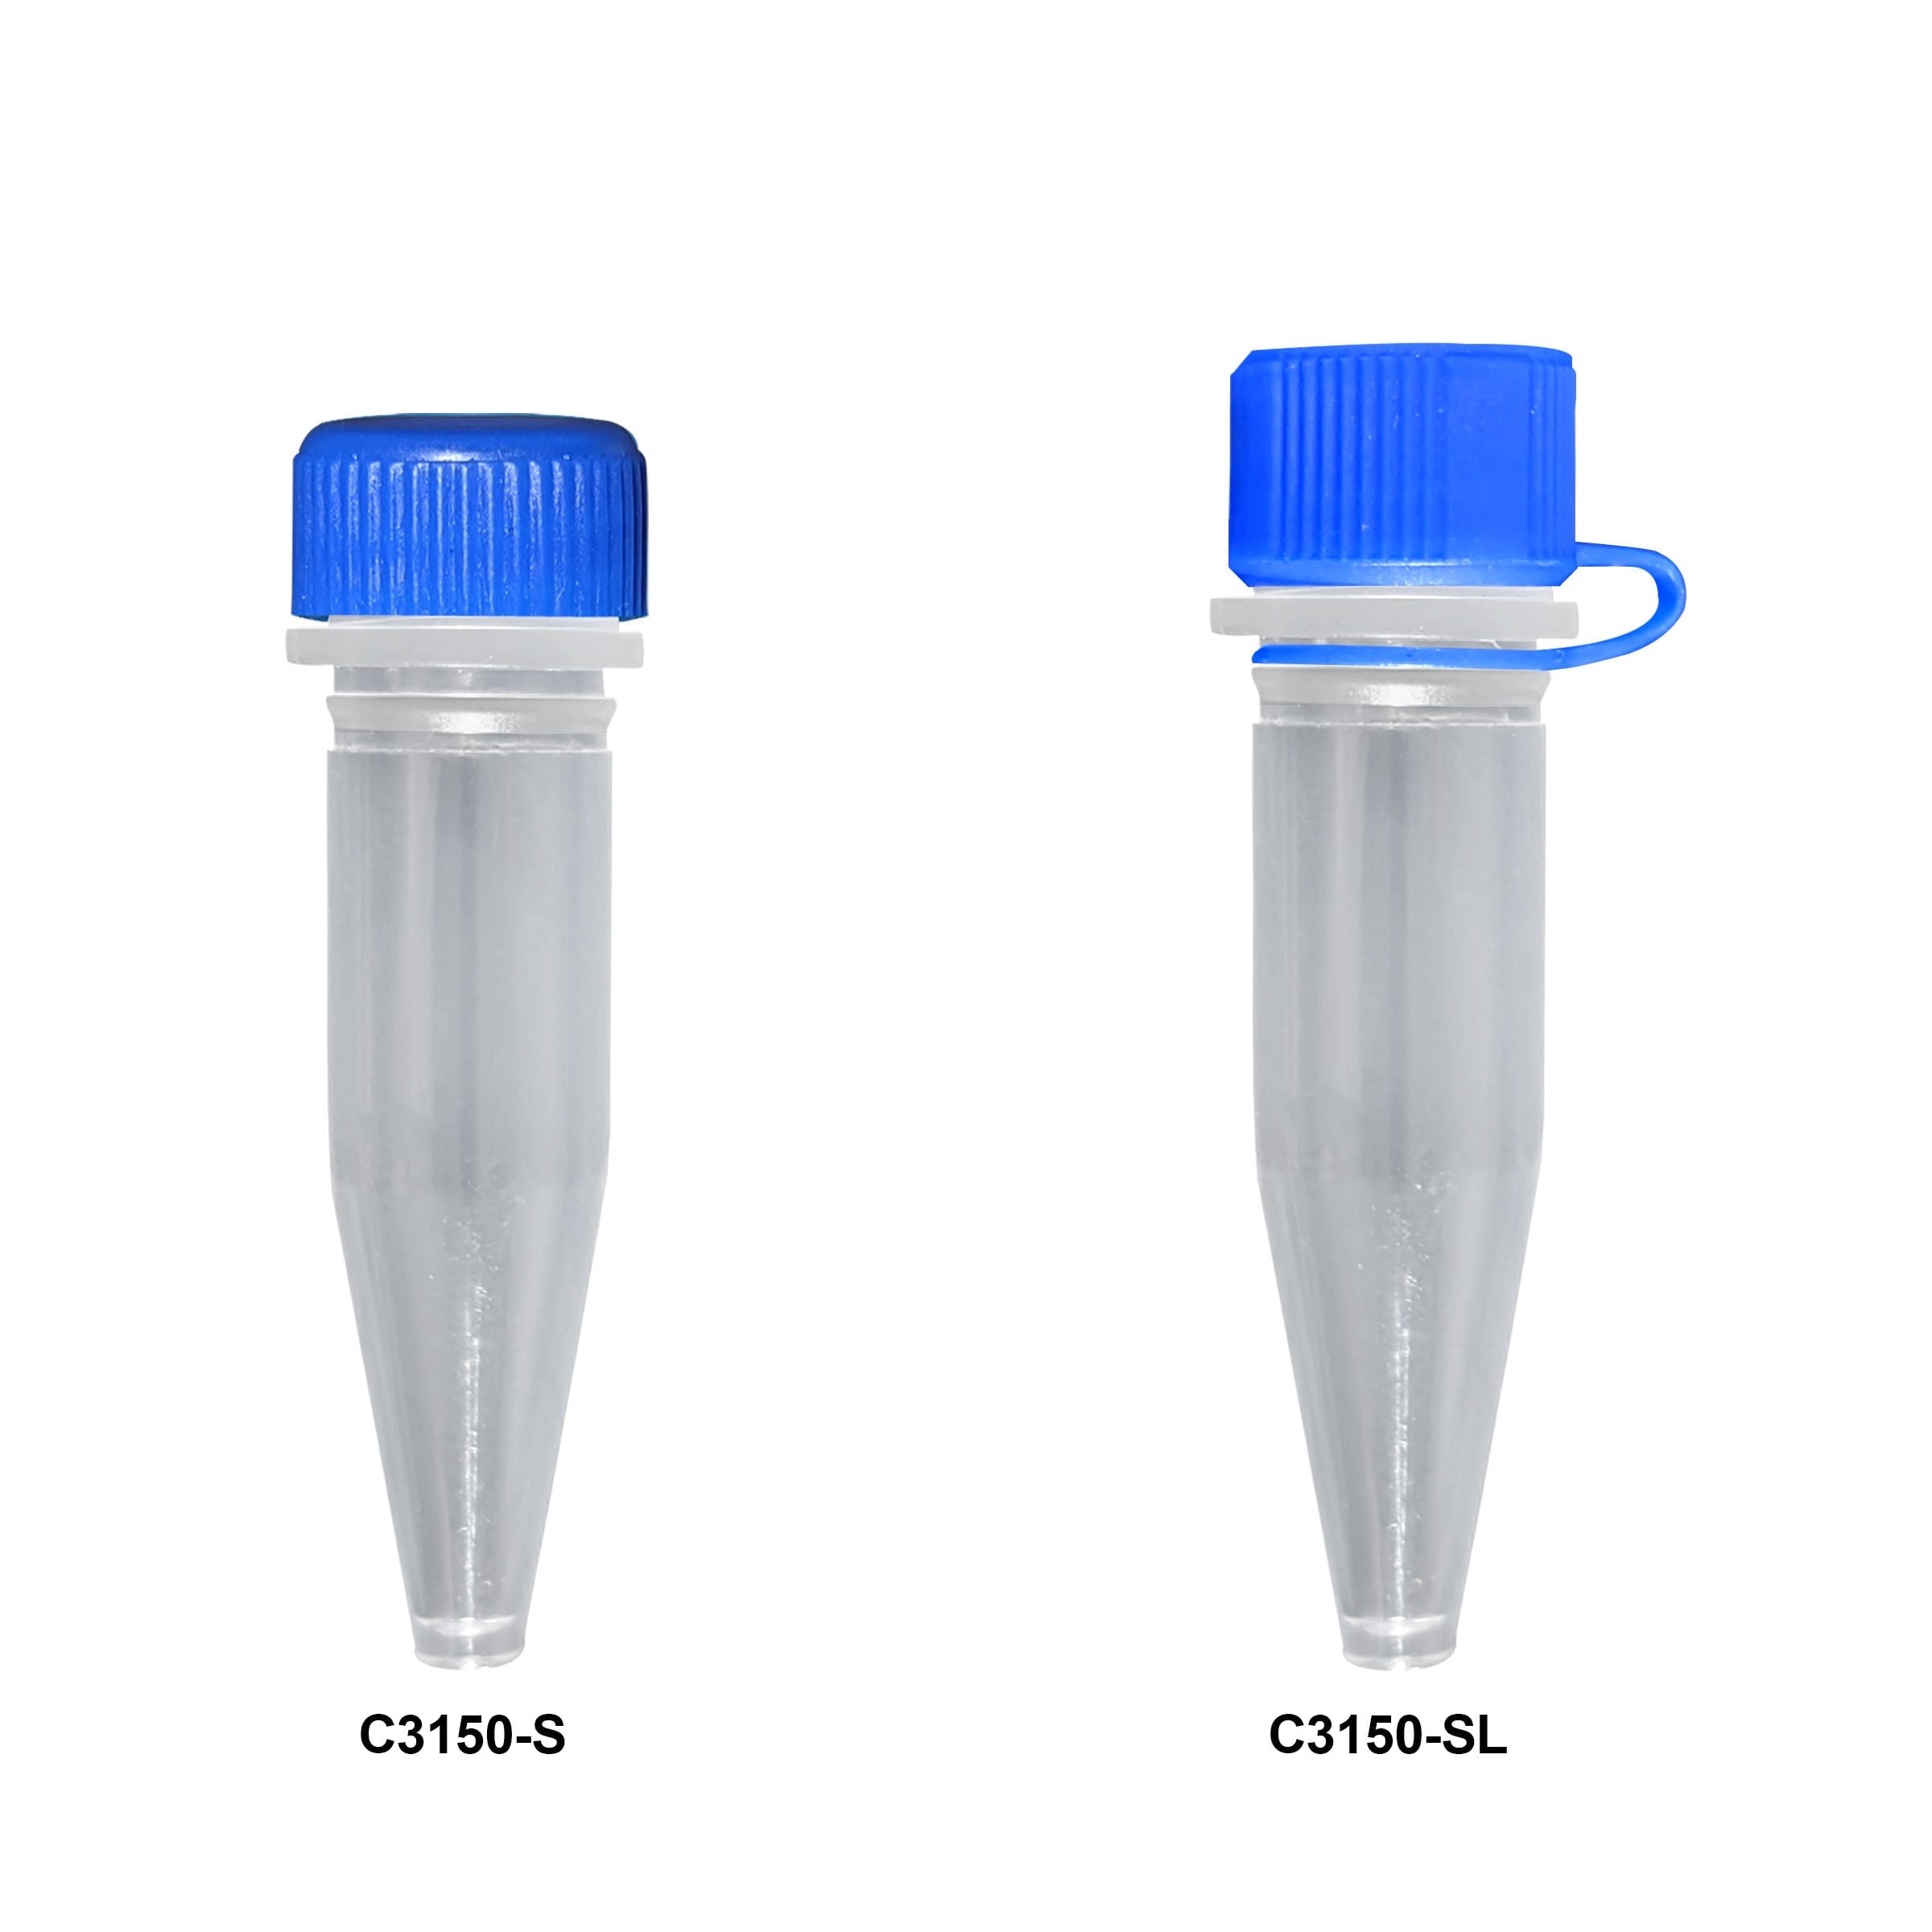 MTC Bio C3150-S Screw-cap 1.5mL Microtube, 10 bags of 100 tubes, 1000/cs